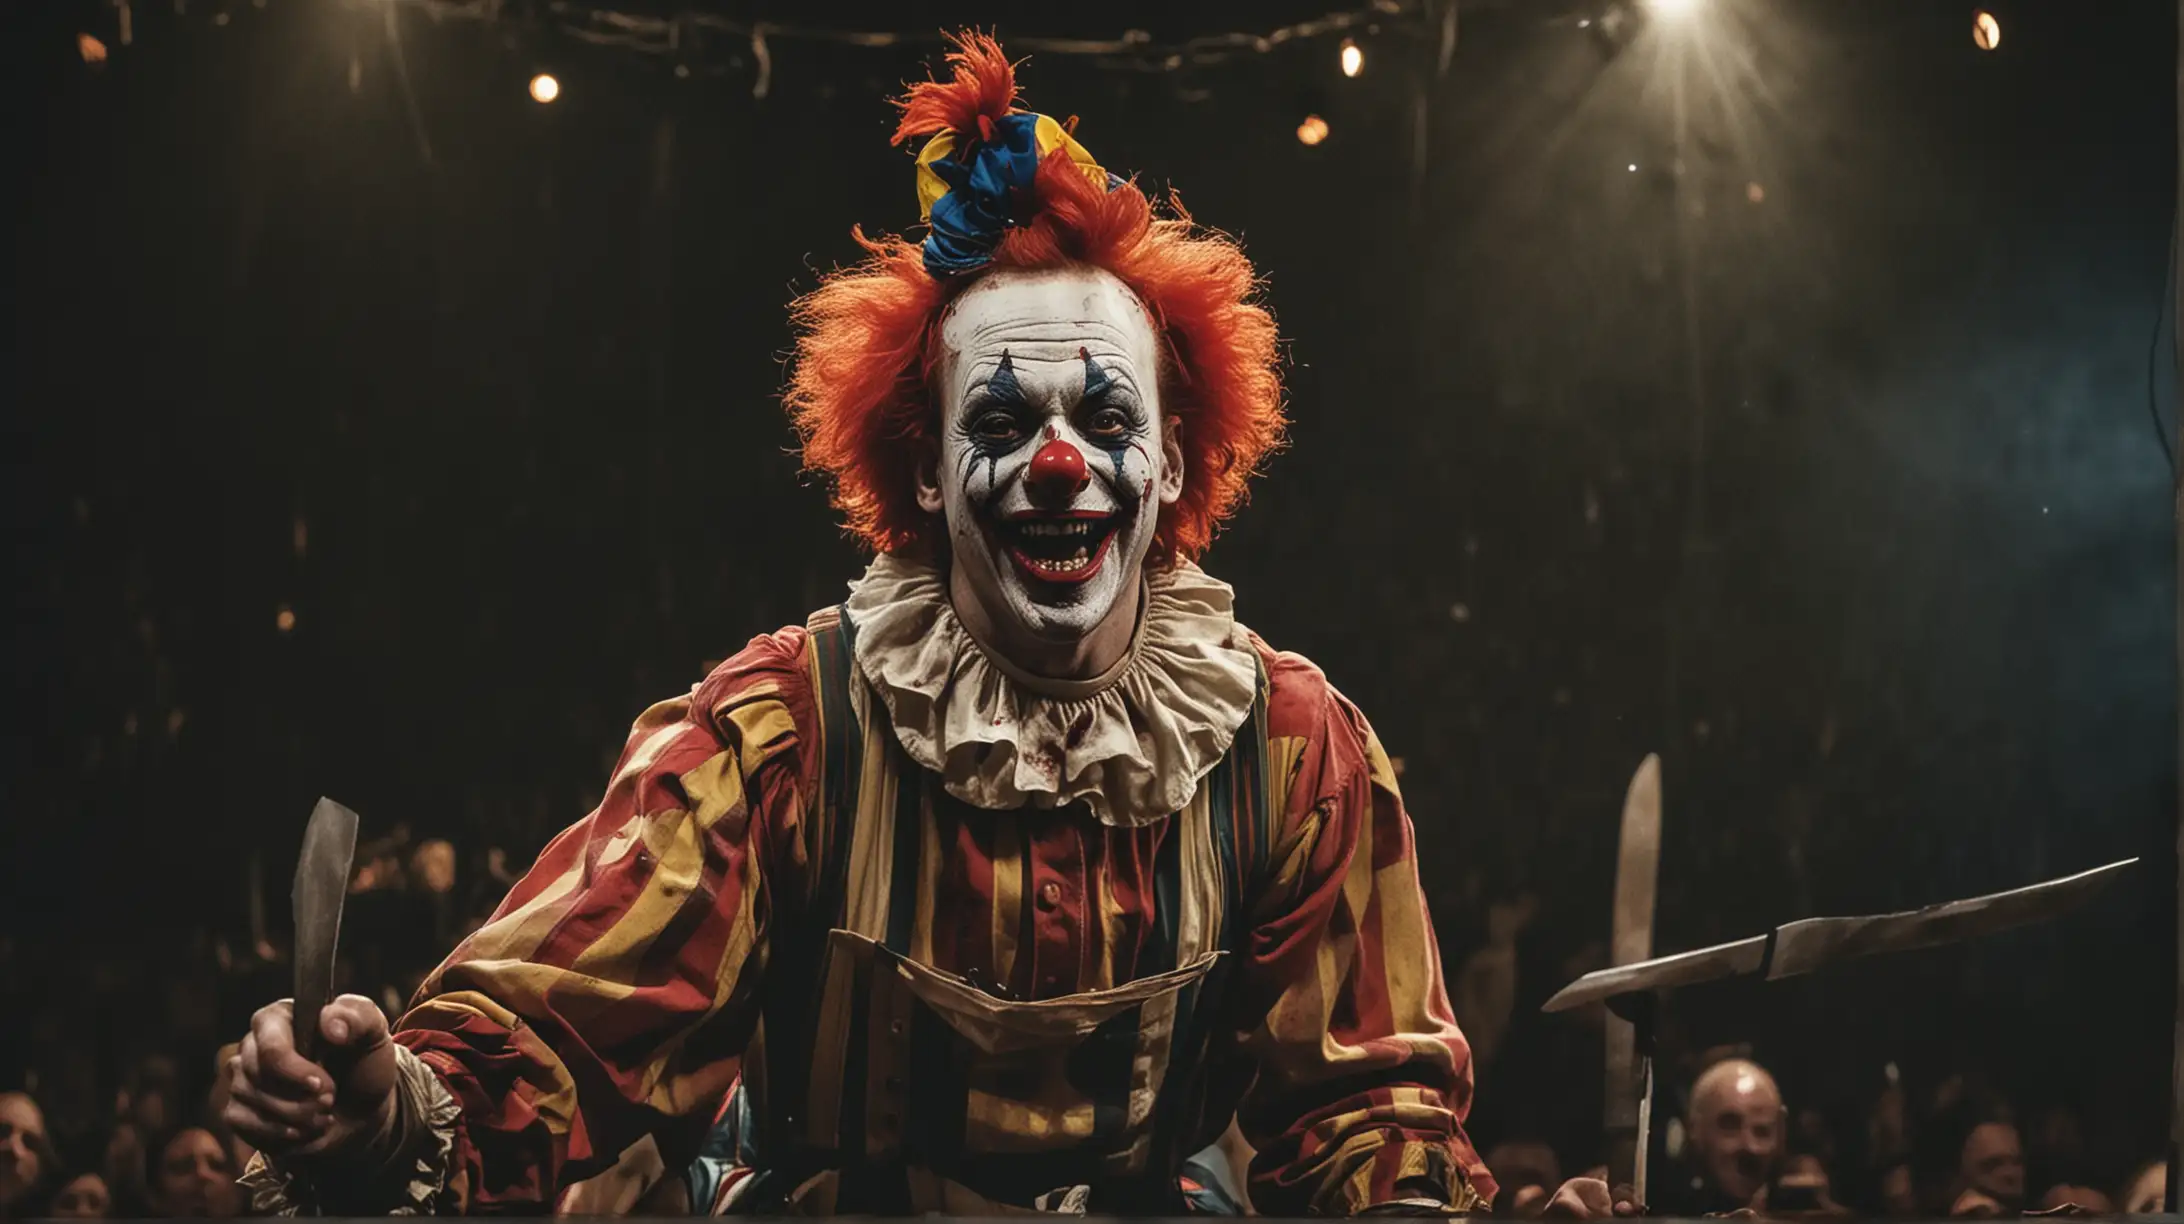 Disturbing Clown Performance Knife Juggling and Mock Execution